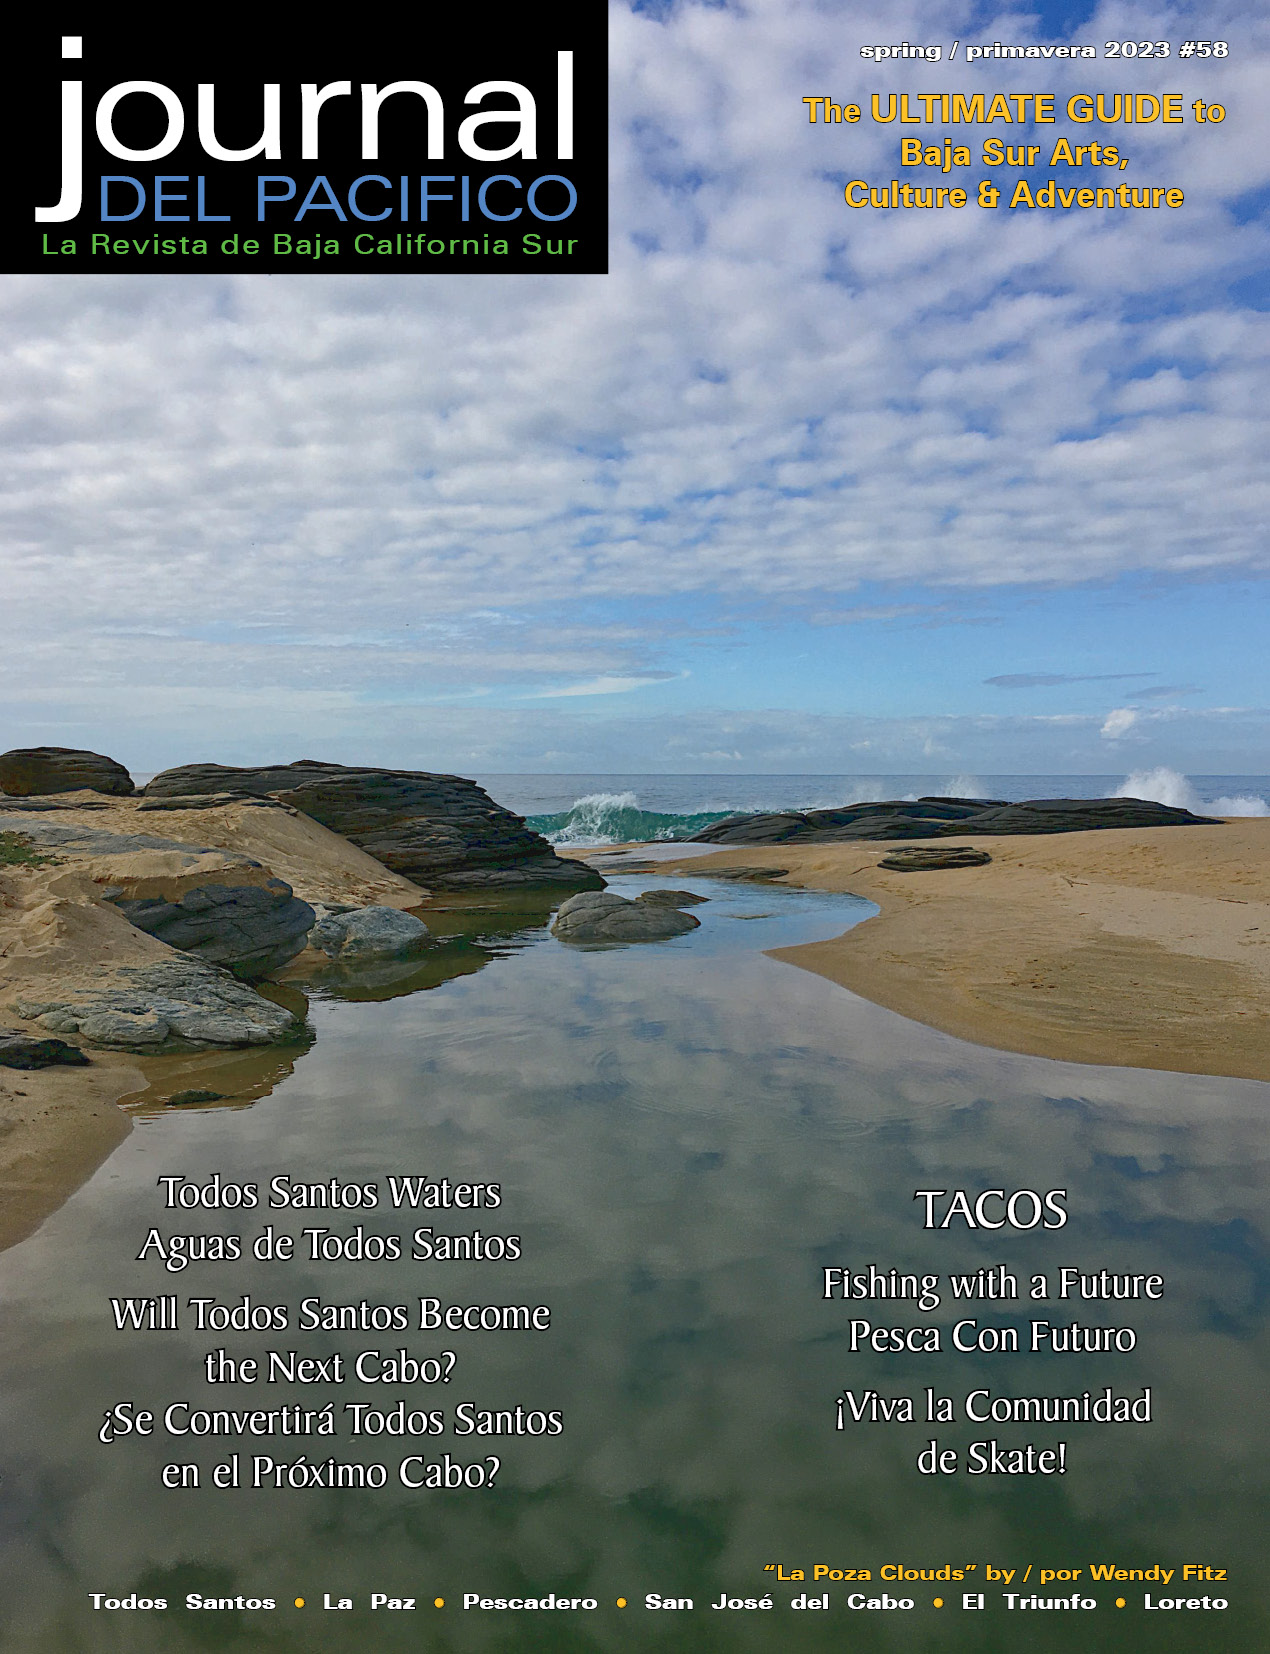 Spring/Primavera 2023 Issue of Journal del Pacifico